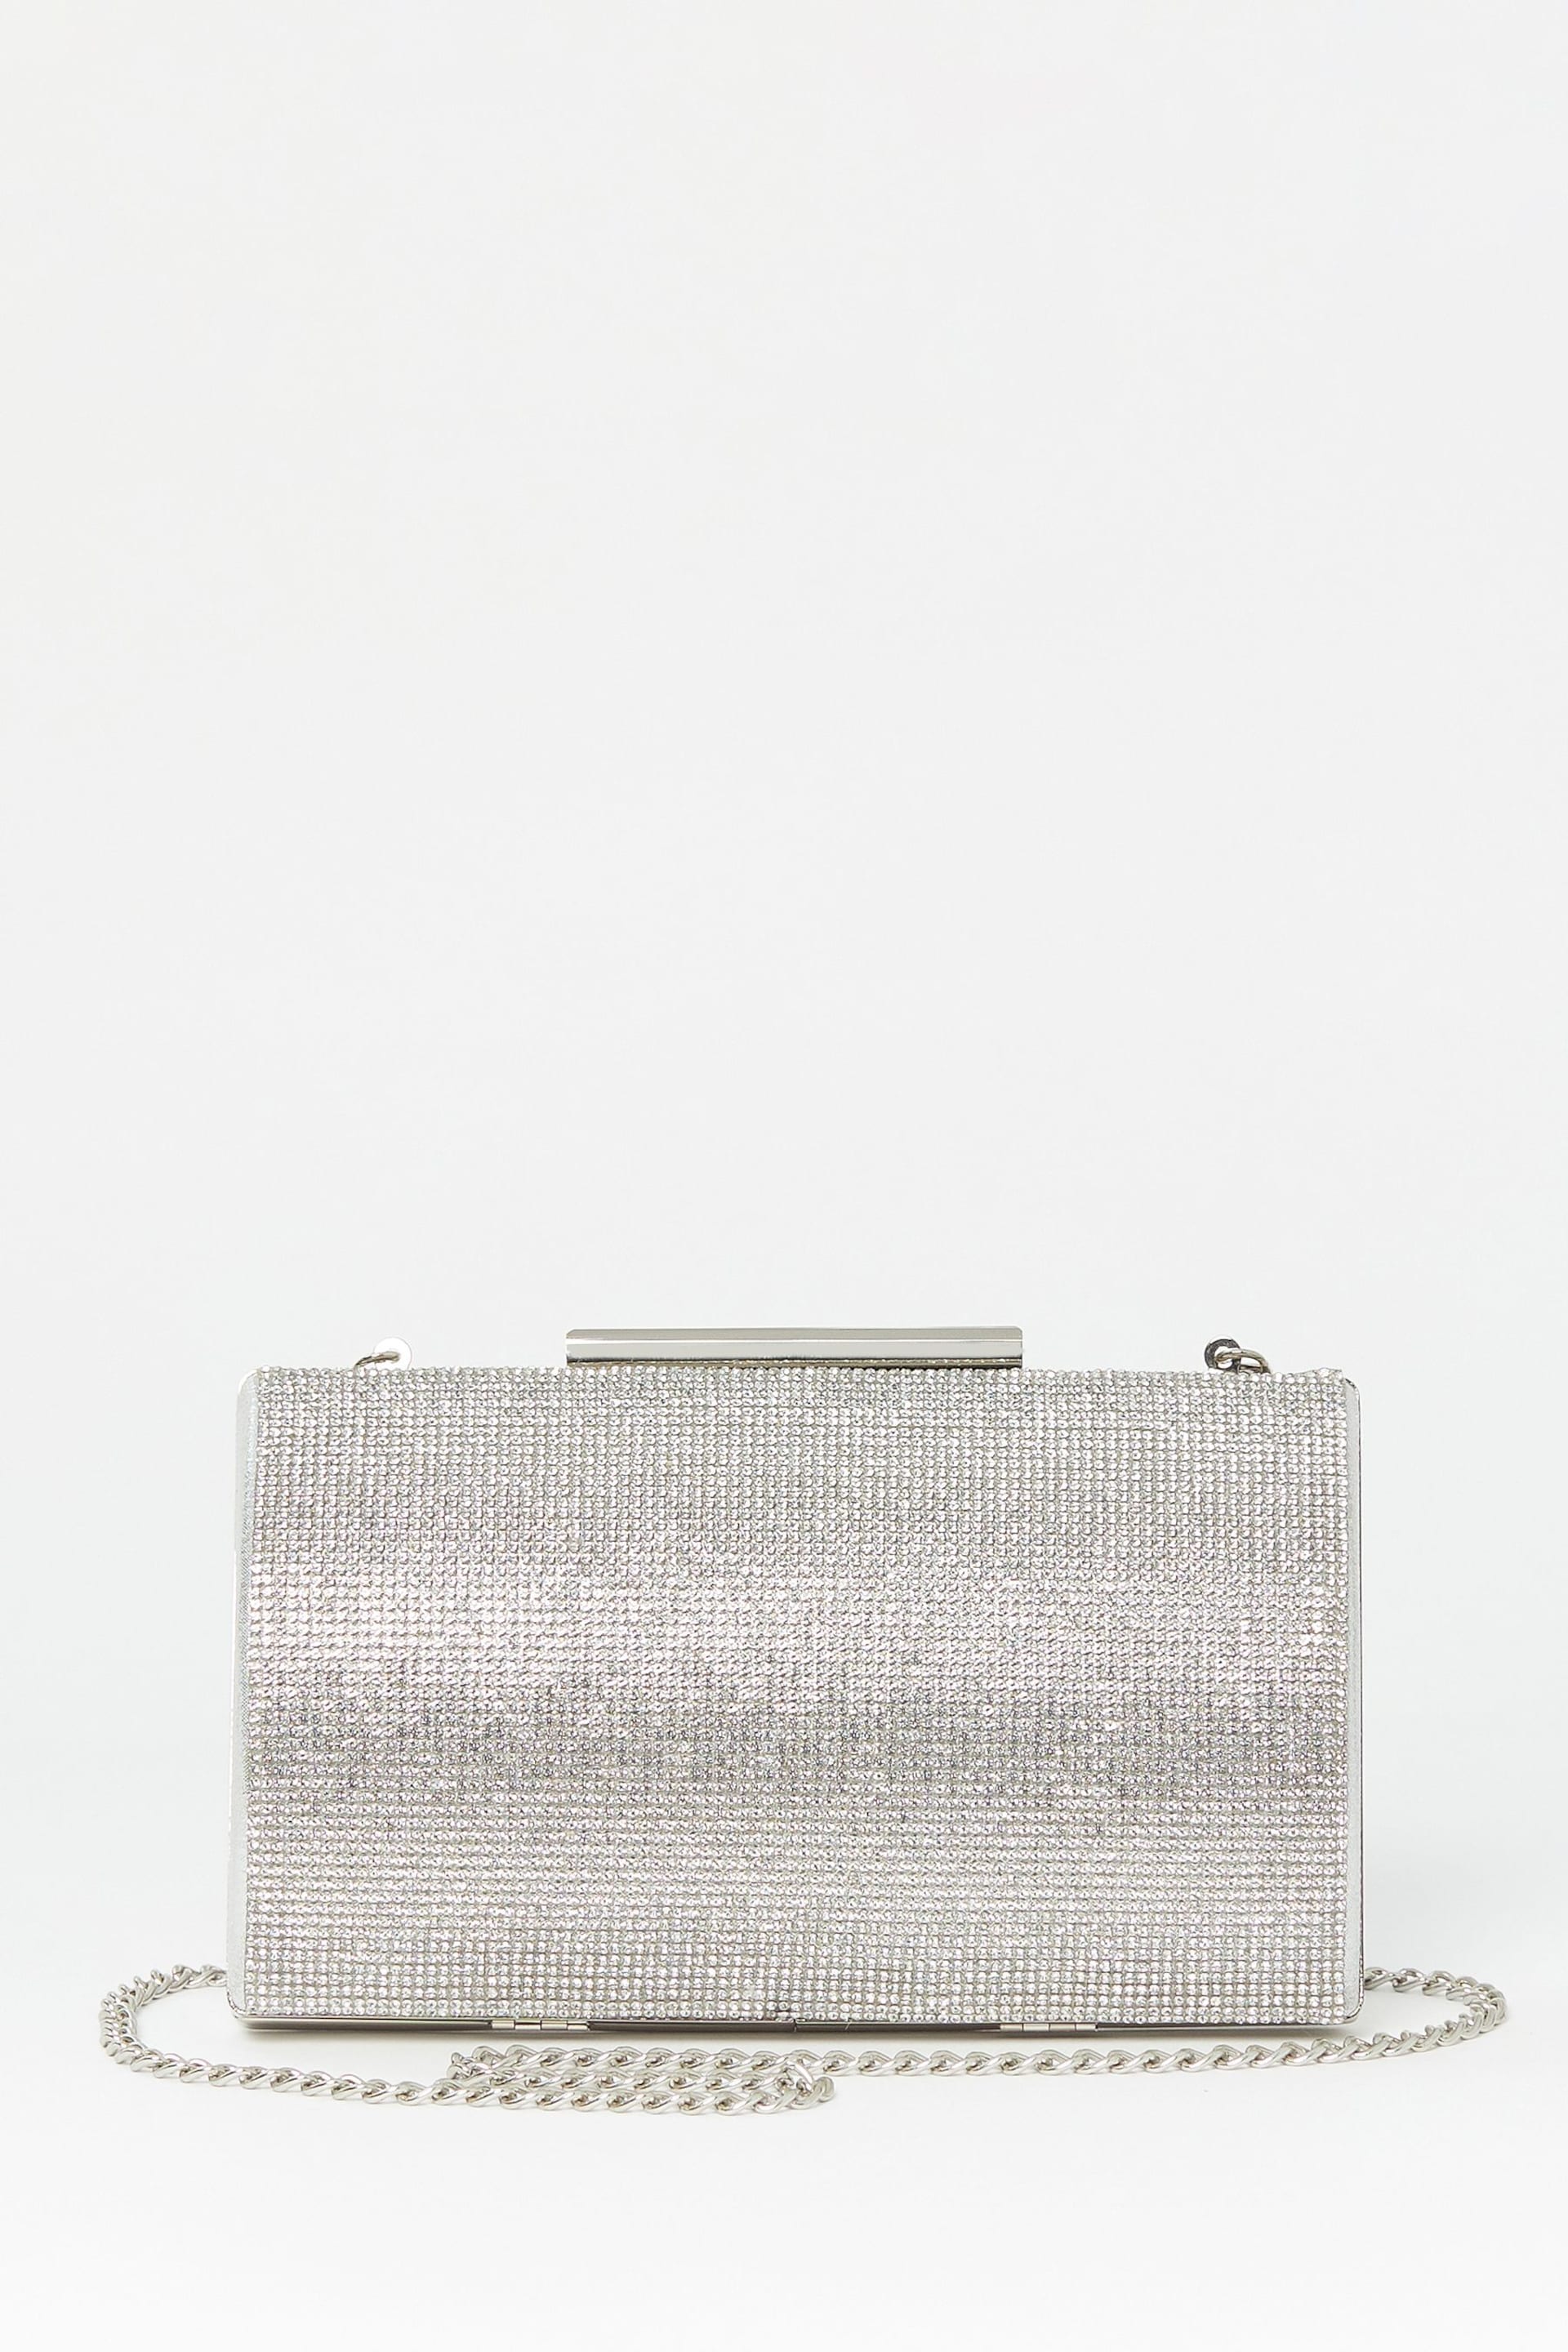 Lipsy Silver Diamante Clutch Ocassion Bag - Image 1 of 4